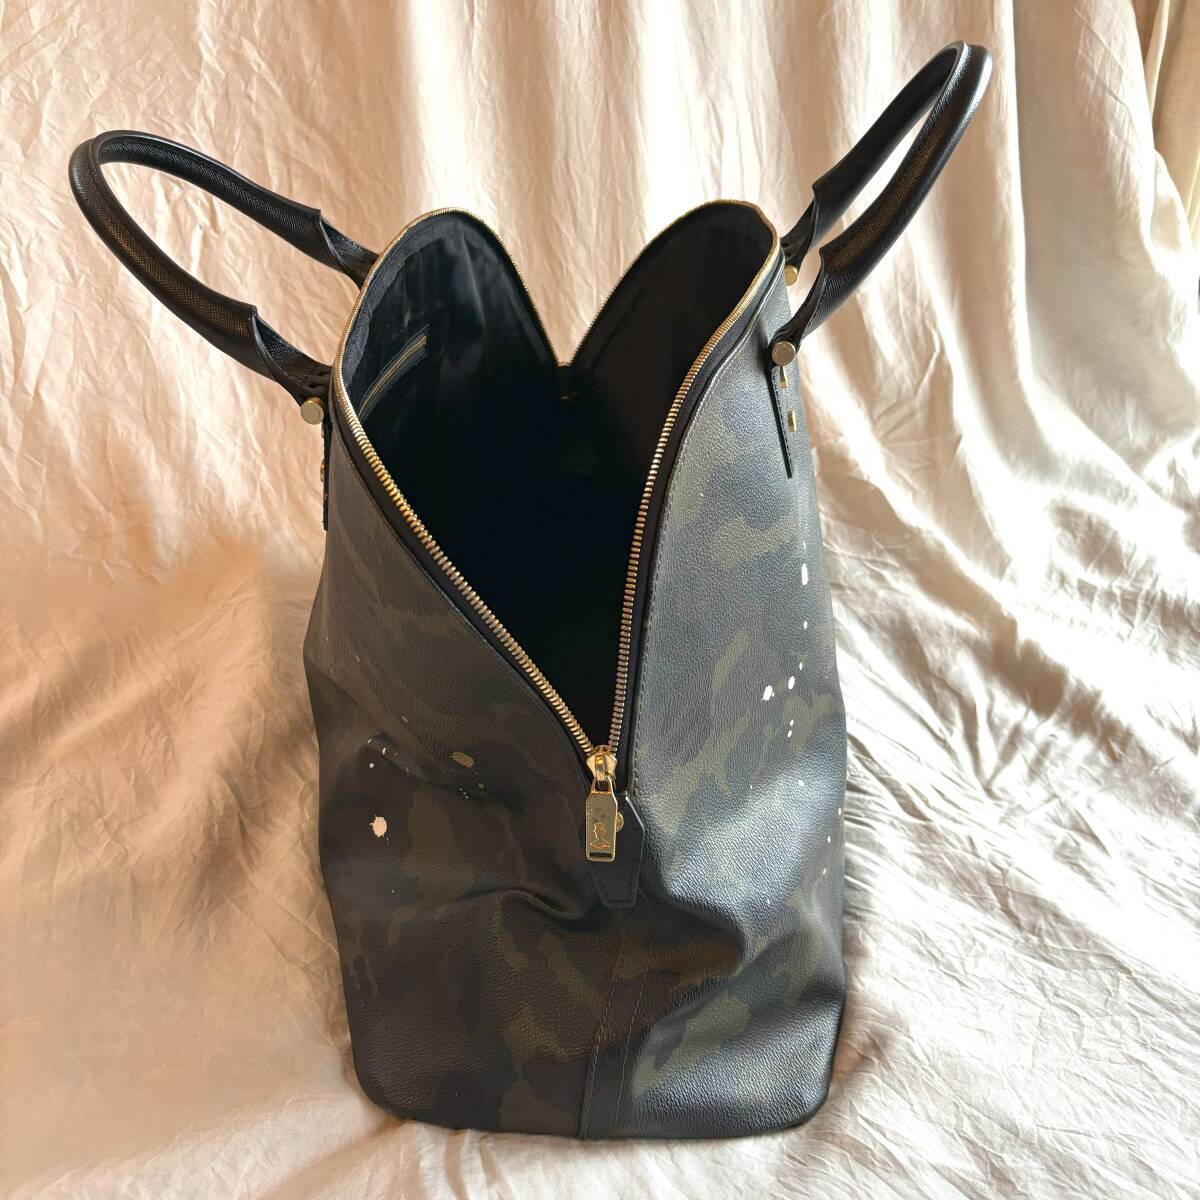 [GENTIL BANDIT| Jean ti van ti] розничная цена 47,300 иен GB1983-MM камуфляж PVC кожа ручная сумочка сумка "Boston bag" портфель 